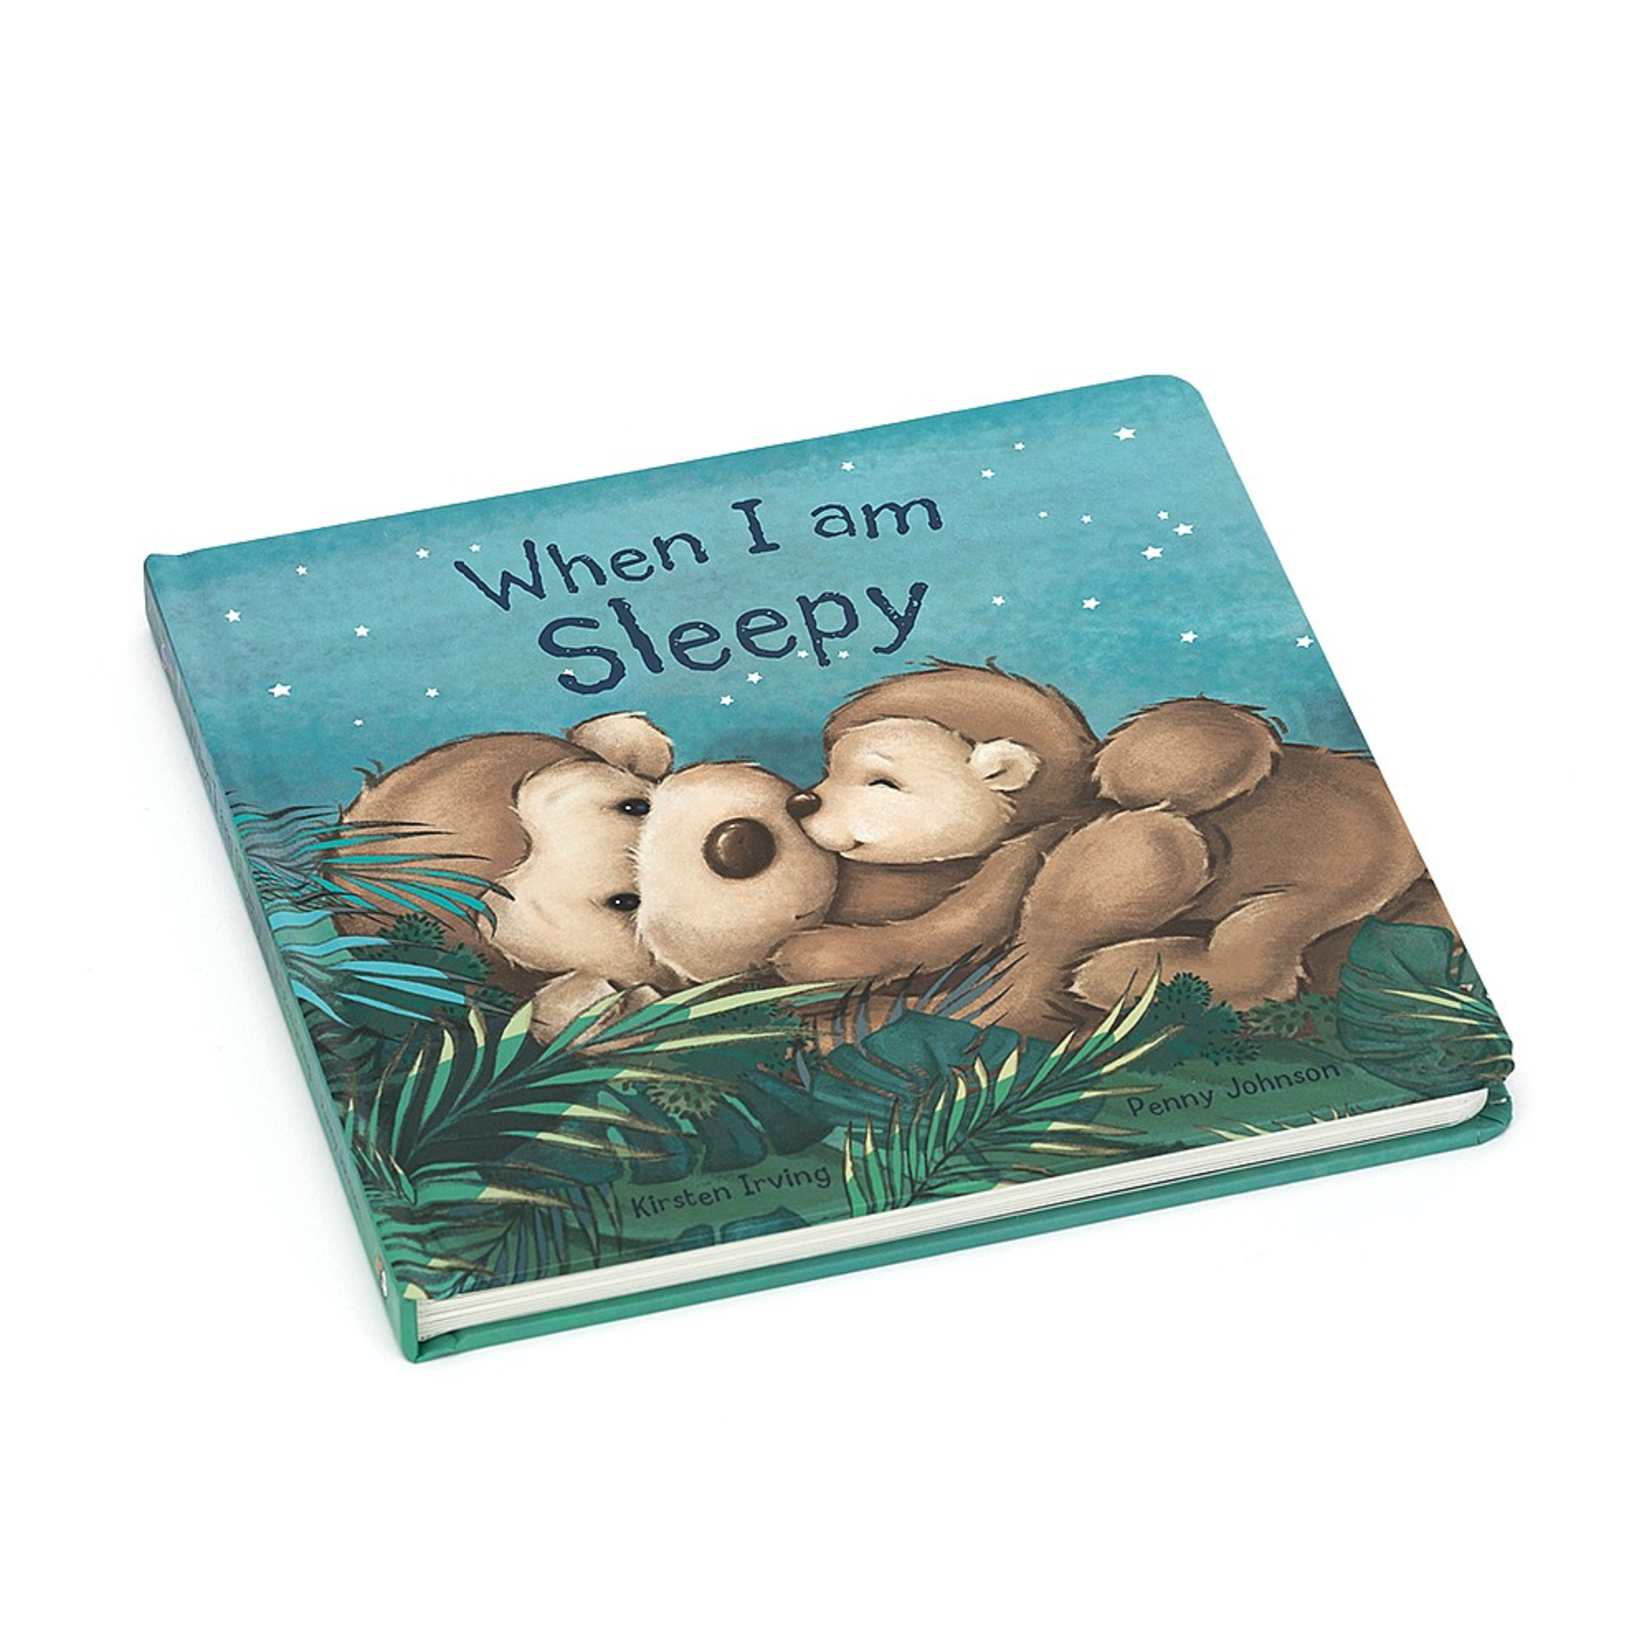 Jellycat - Story Book Jellycat - When I Am Sleepy Book